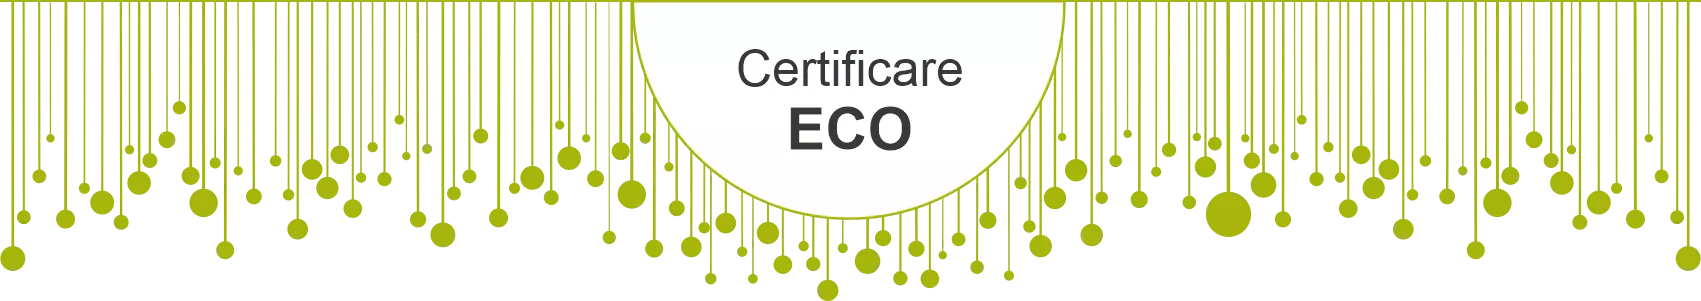 Certificate ECO